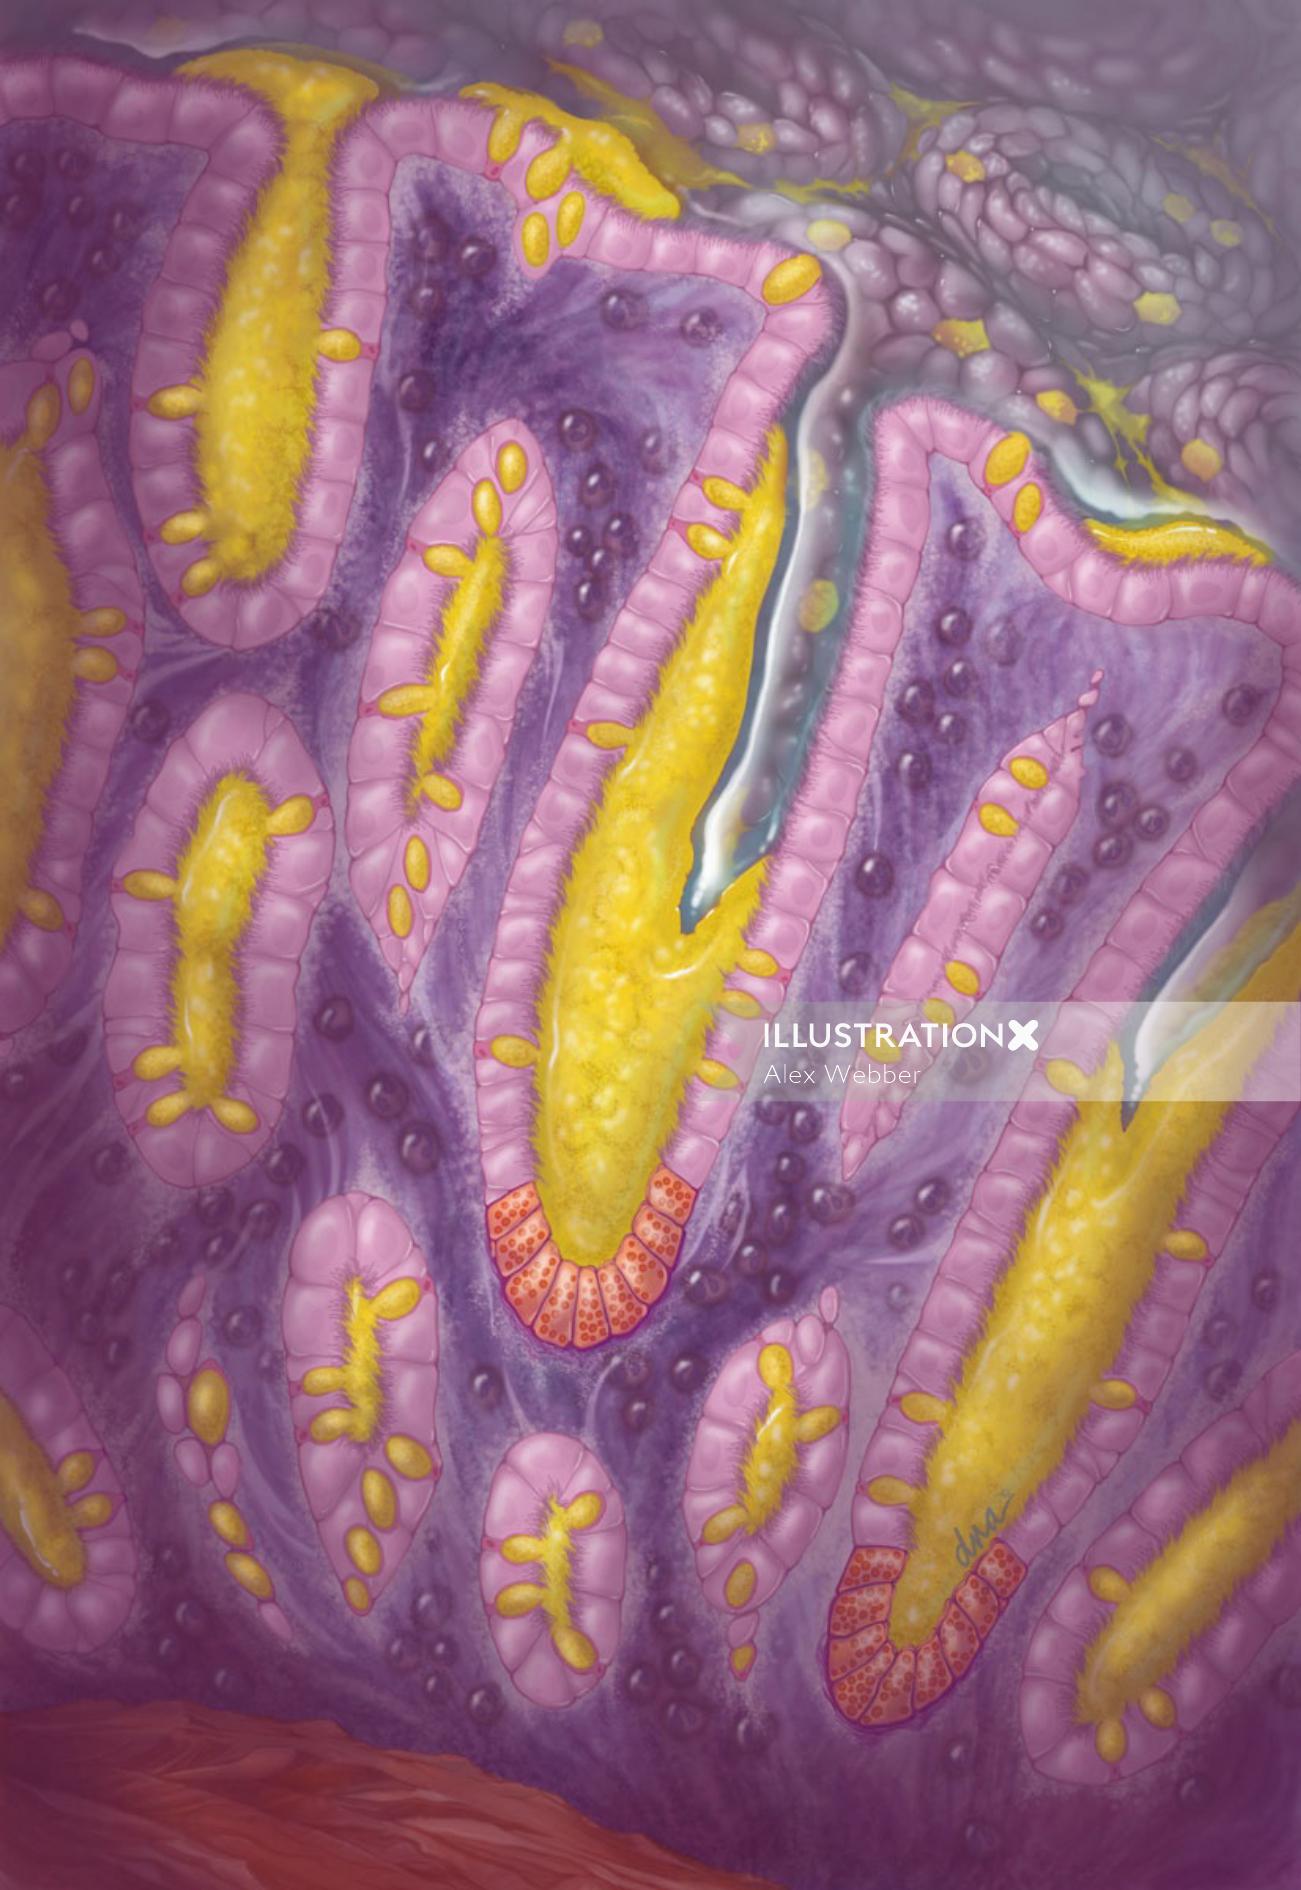 Arte realista da histologia do intestino grosso mostrando mucosite